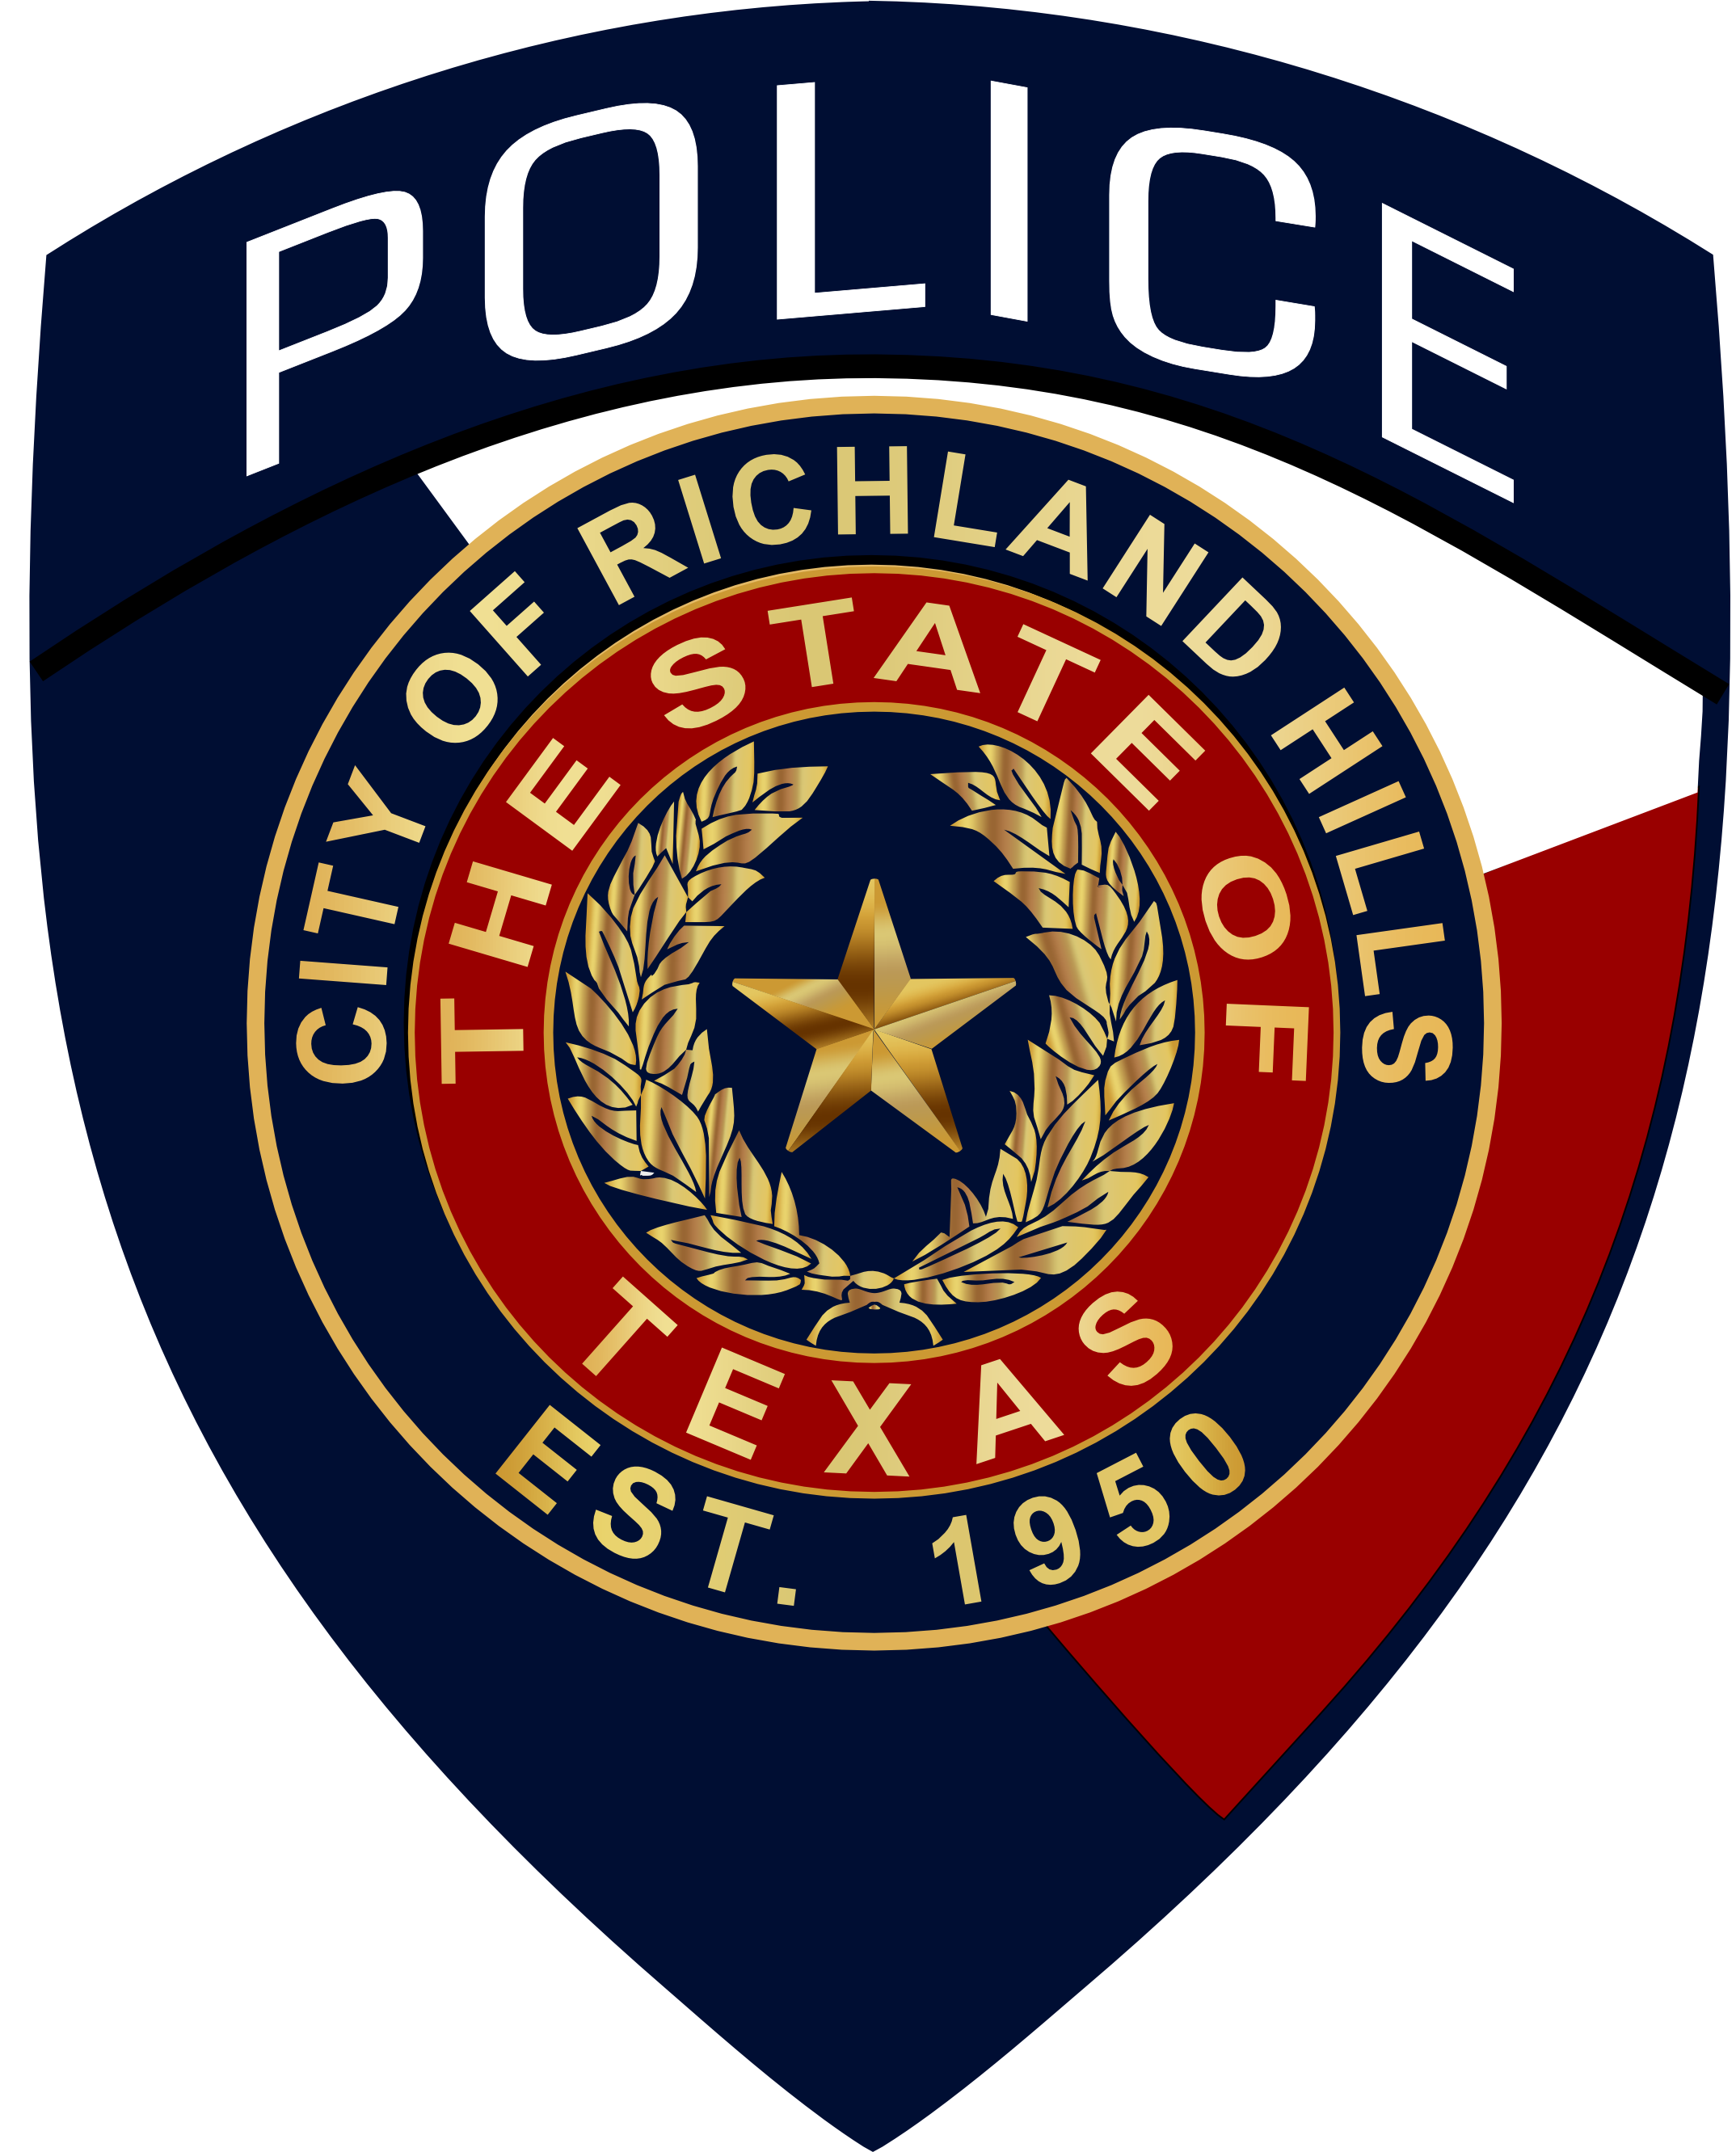 Richland Hills Police Department, TX Public Safety Jobs